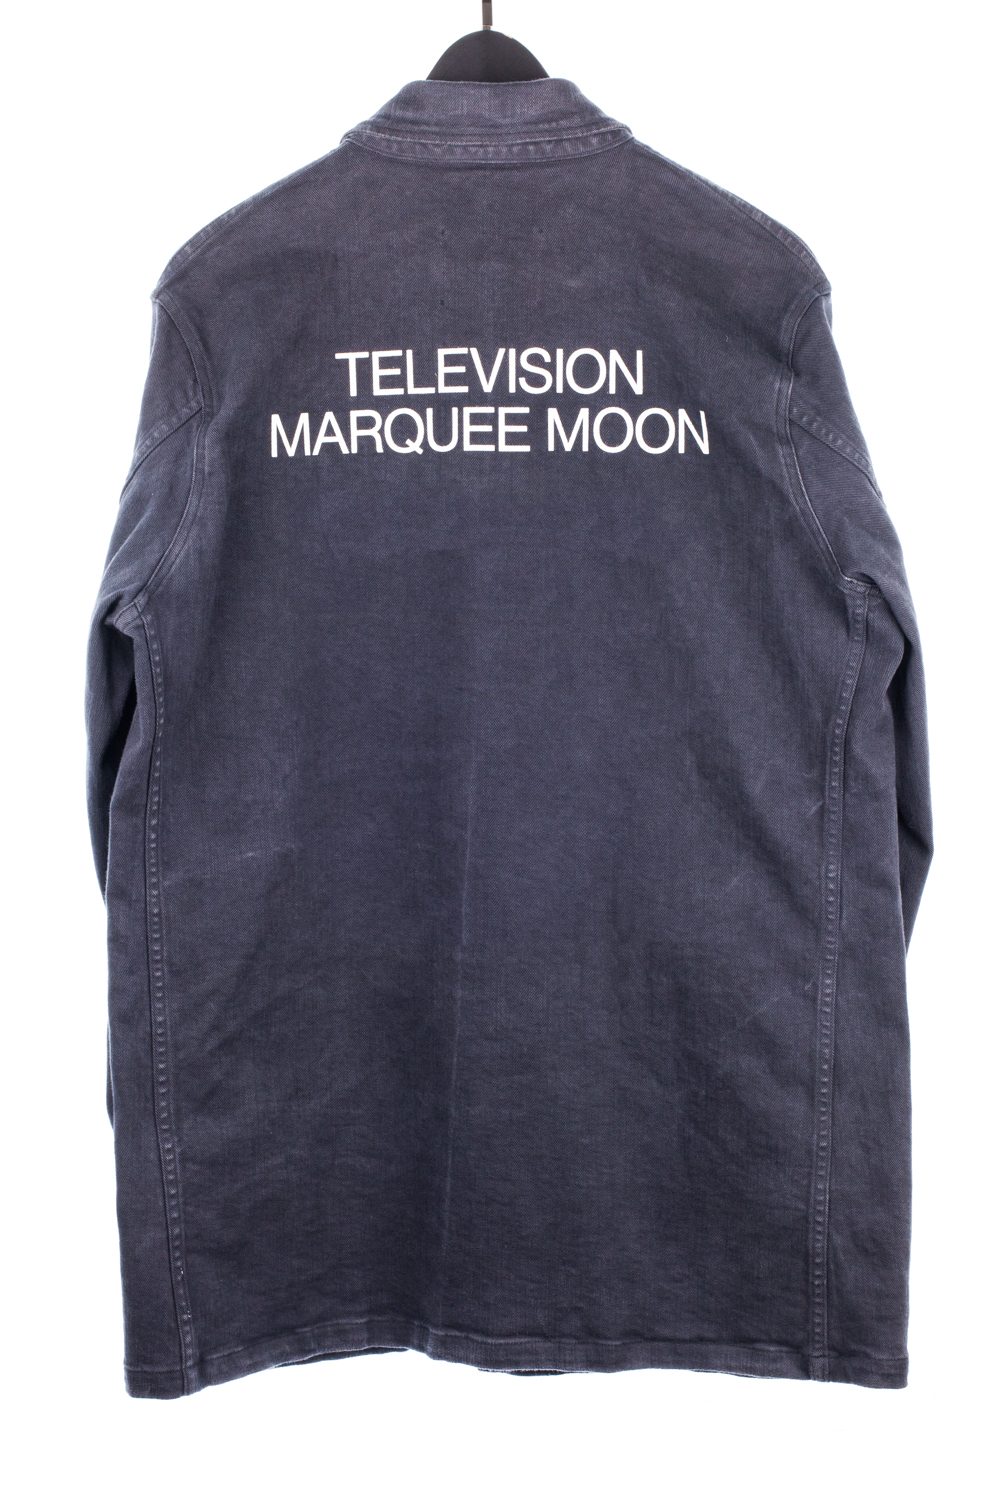 Television Marquee Moon Denim Jacket